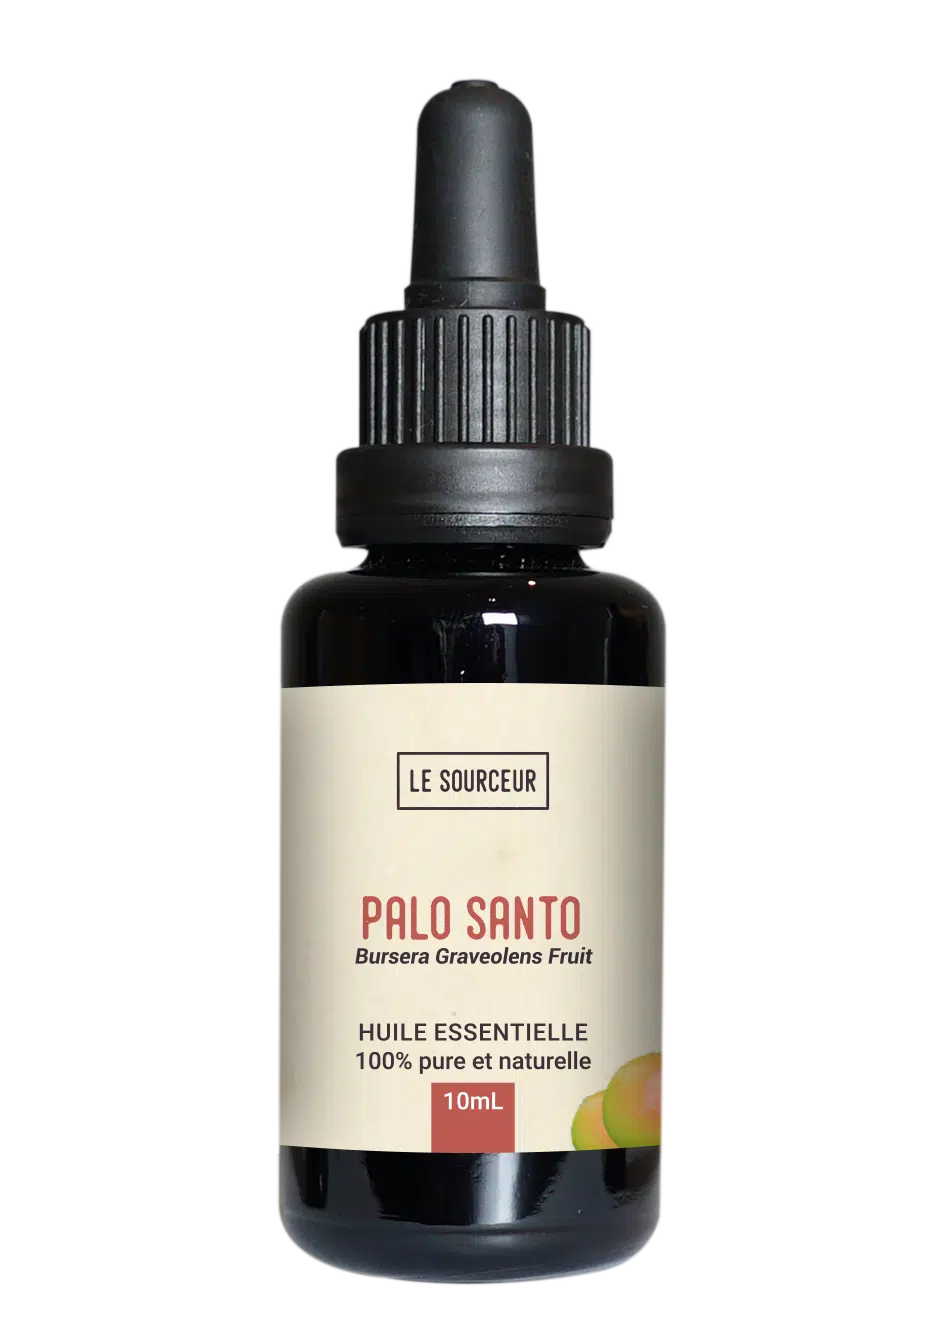 Bottle of Palo Santo essential oil